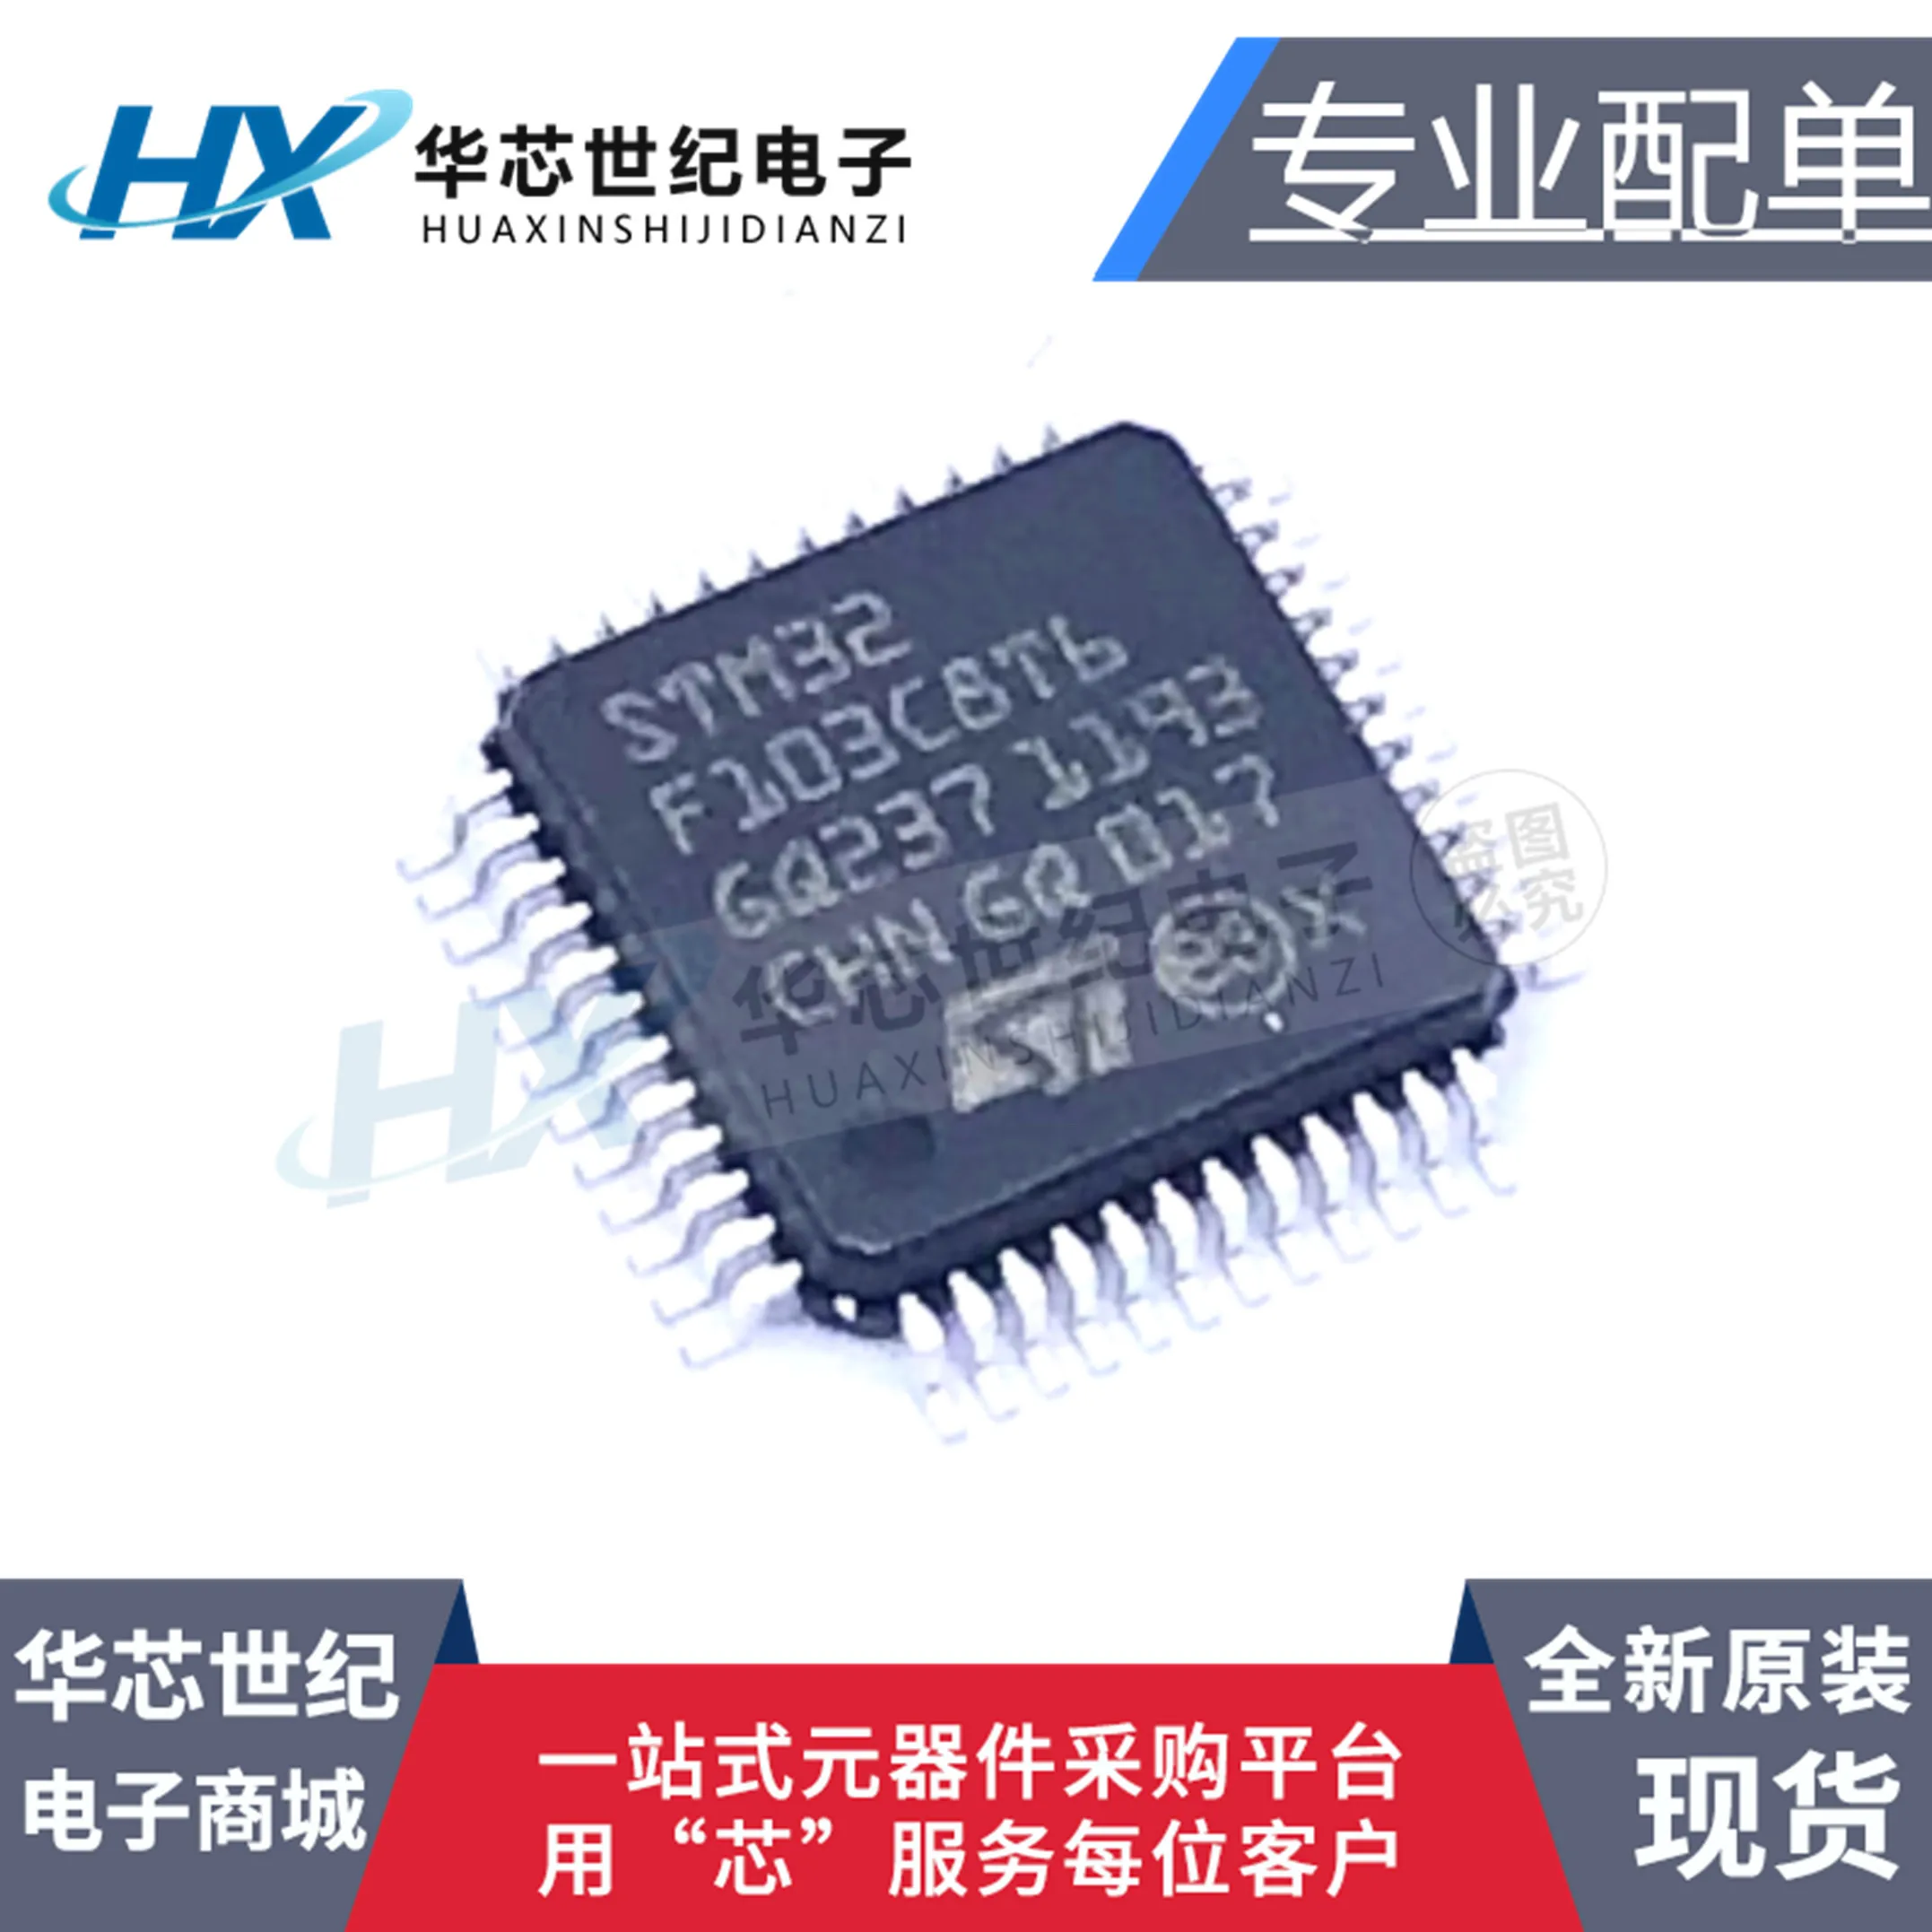 

2pcs original new STM32F103C8T6 LQFP-48 ARM Cortex-M3 32-bit microcontroller MCU